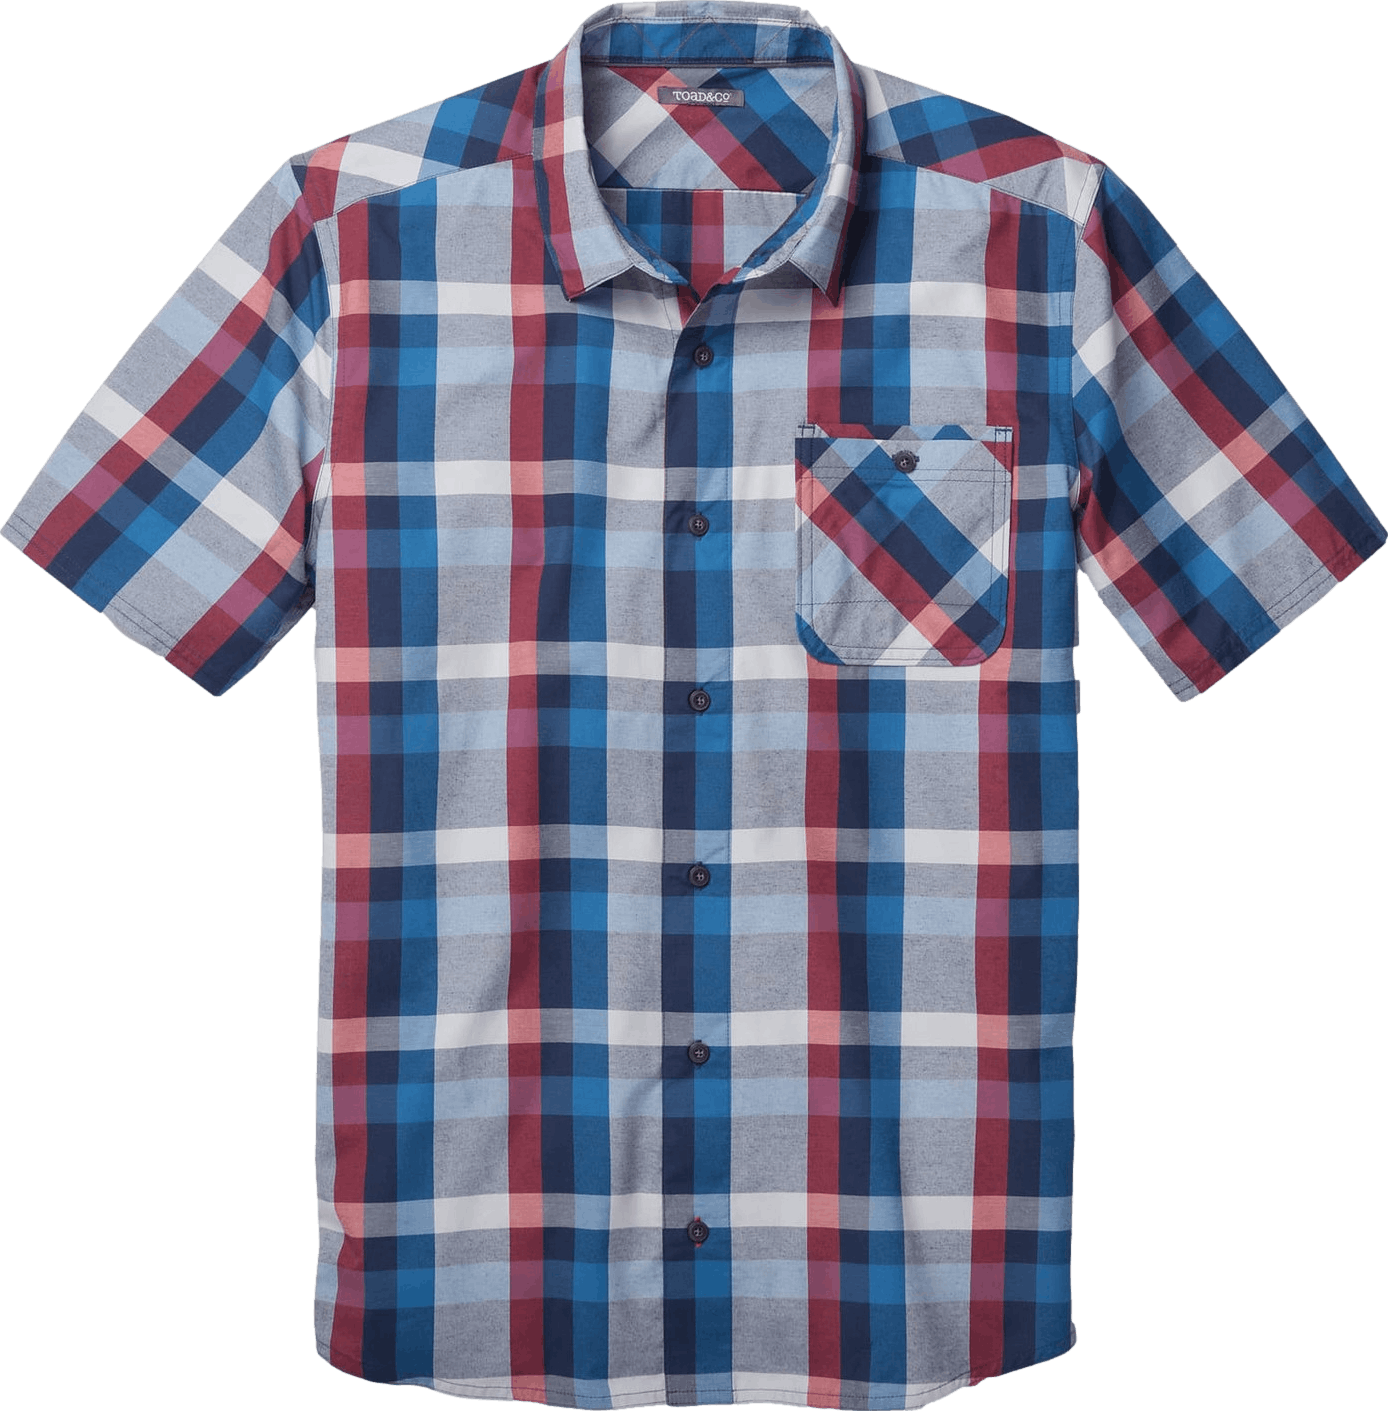 Toad&Co. Men's Ventilair Short Sleeve Shirt